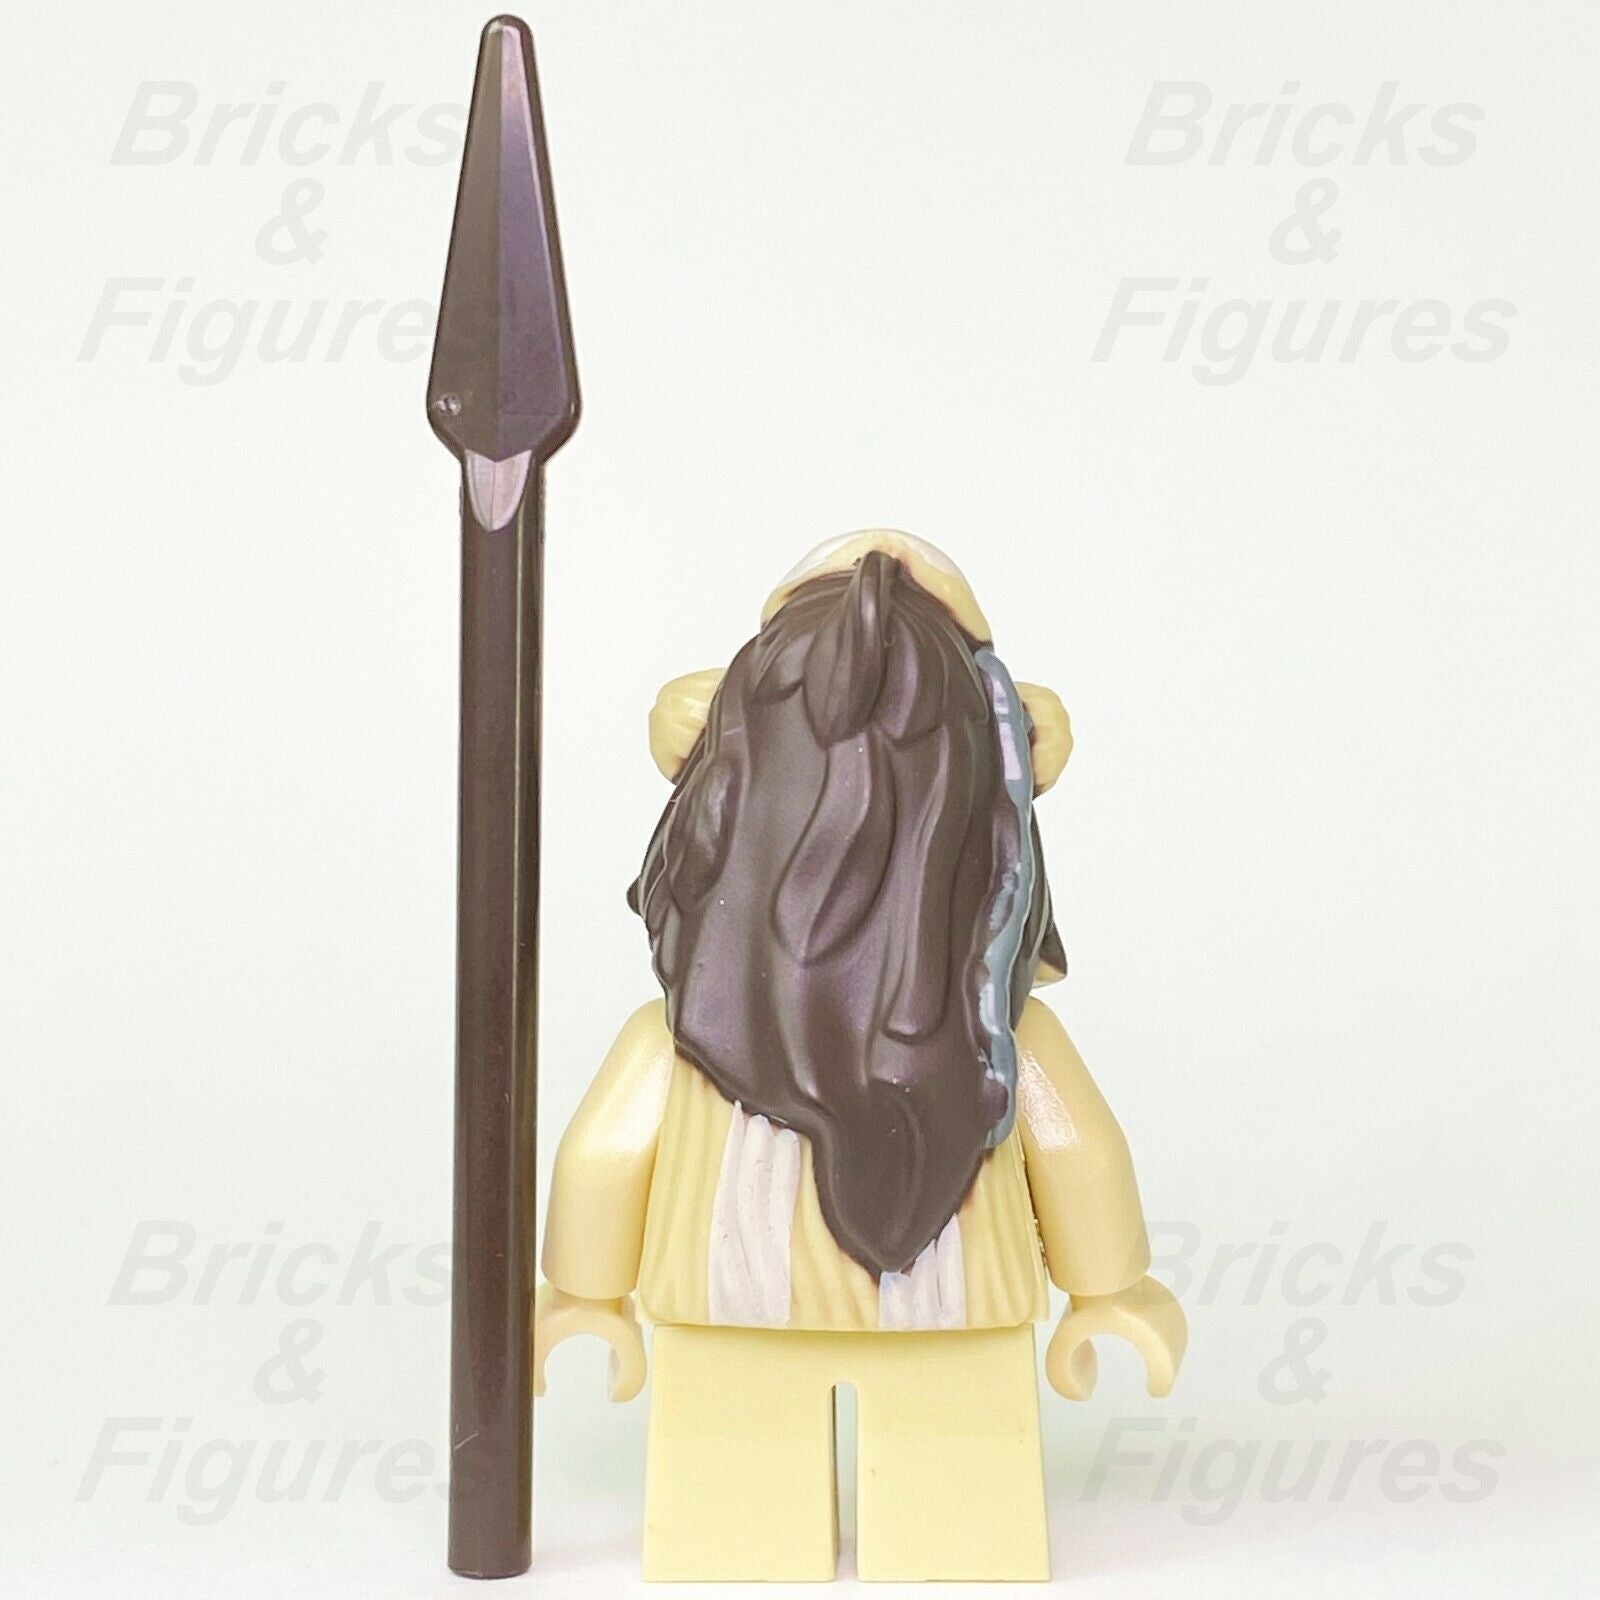 New Star Wars LEGO Logray Ewok Return of the Jedi Minifig 7956 10236 Genuine - Bricks & Figures